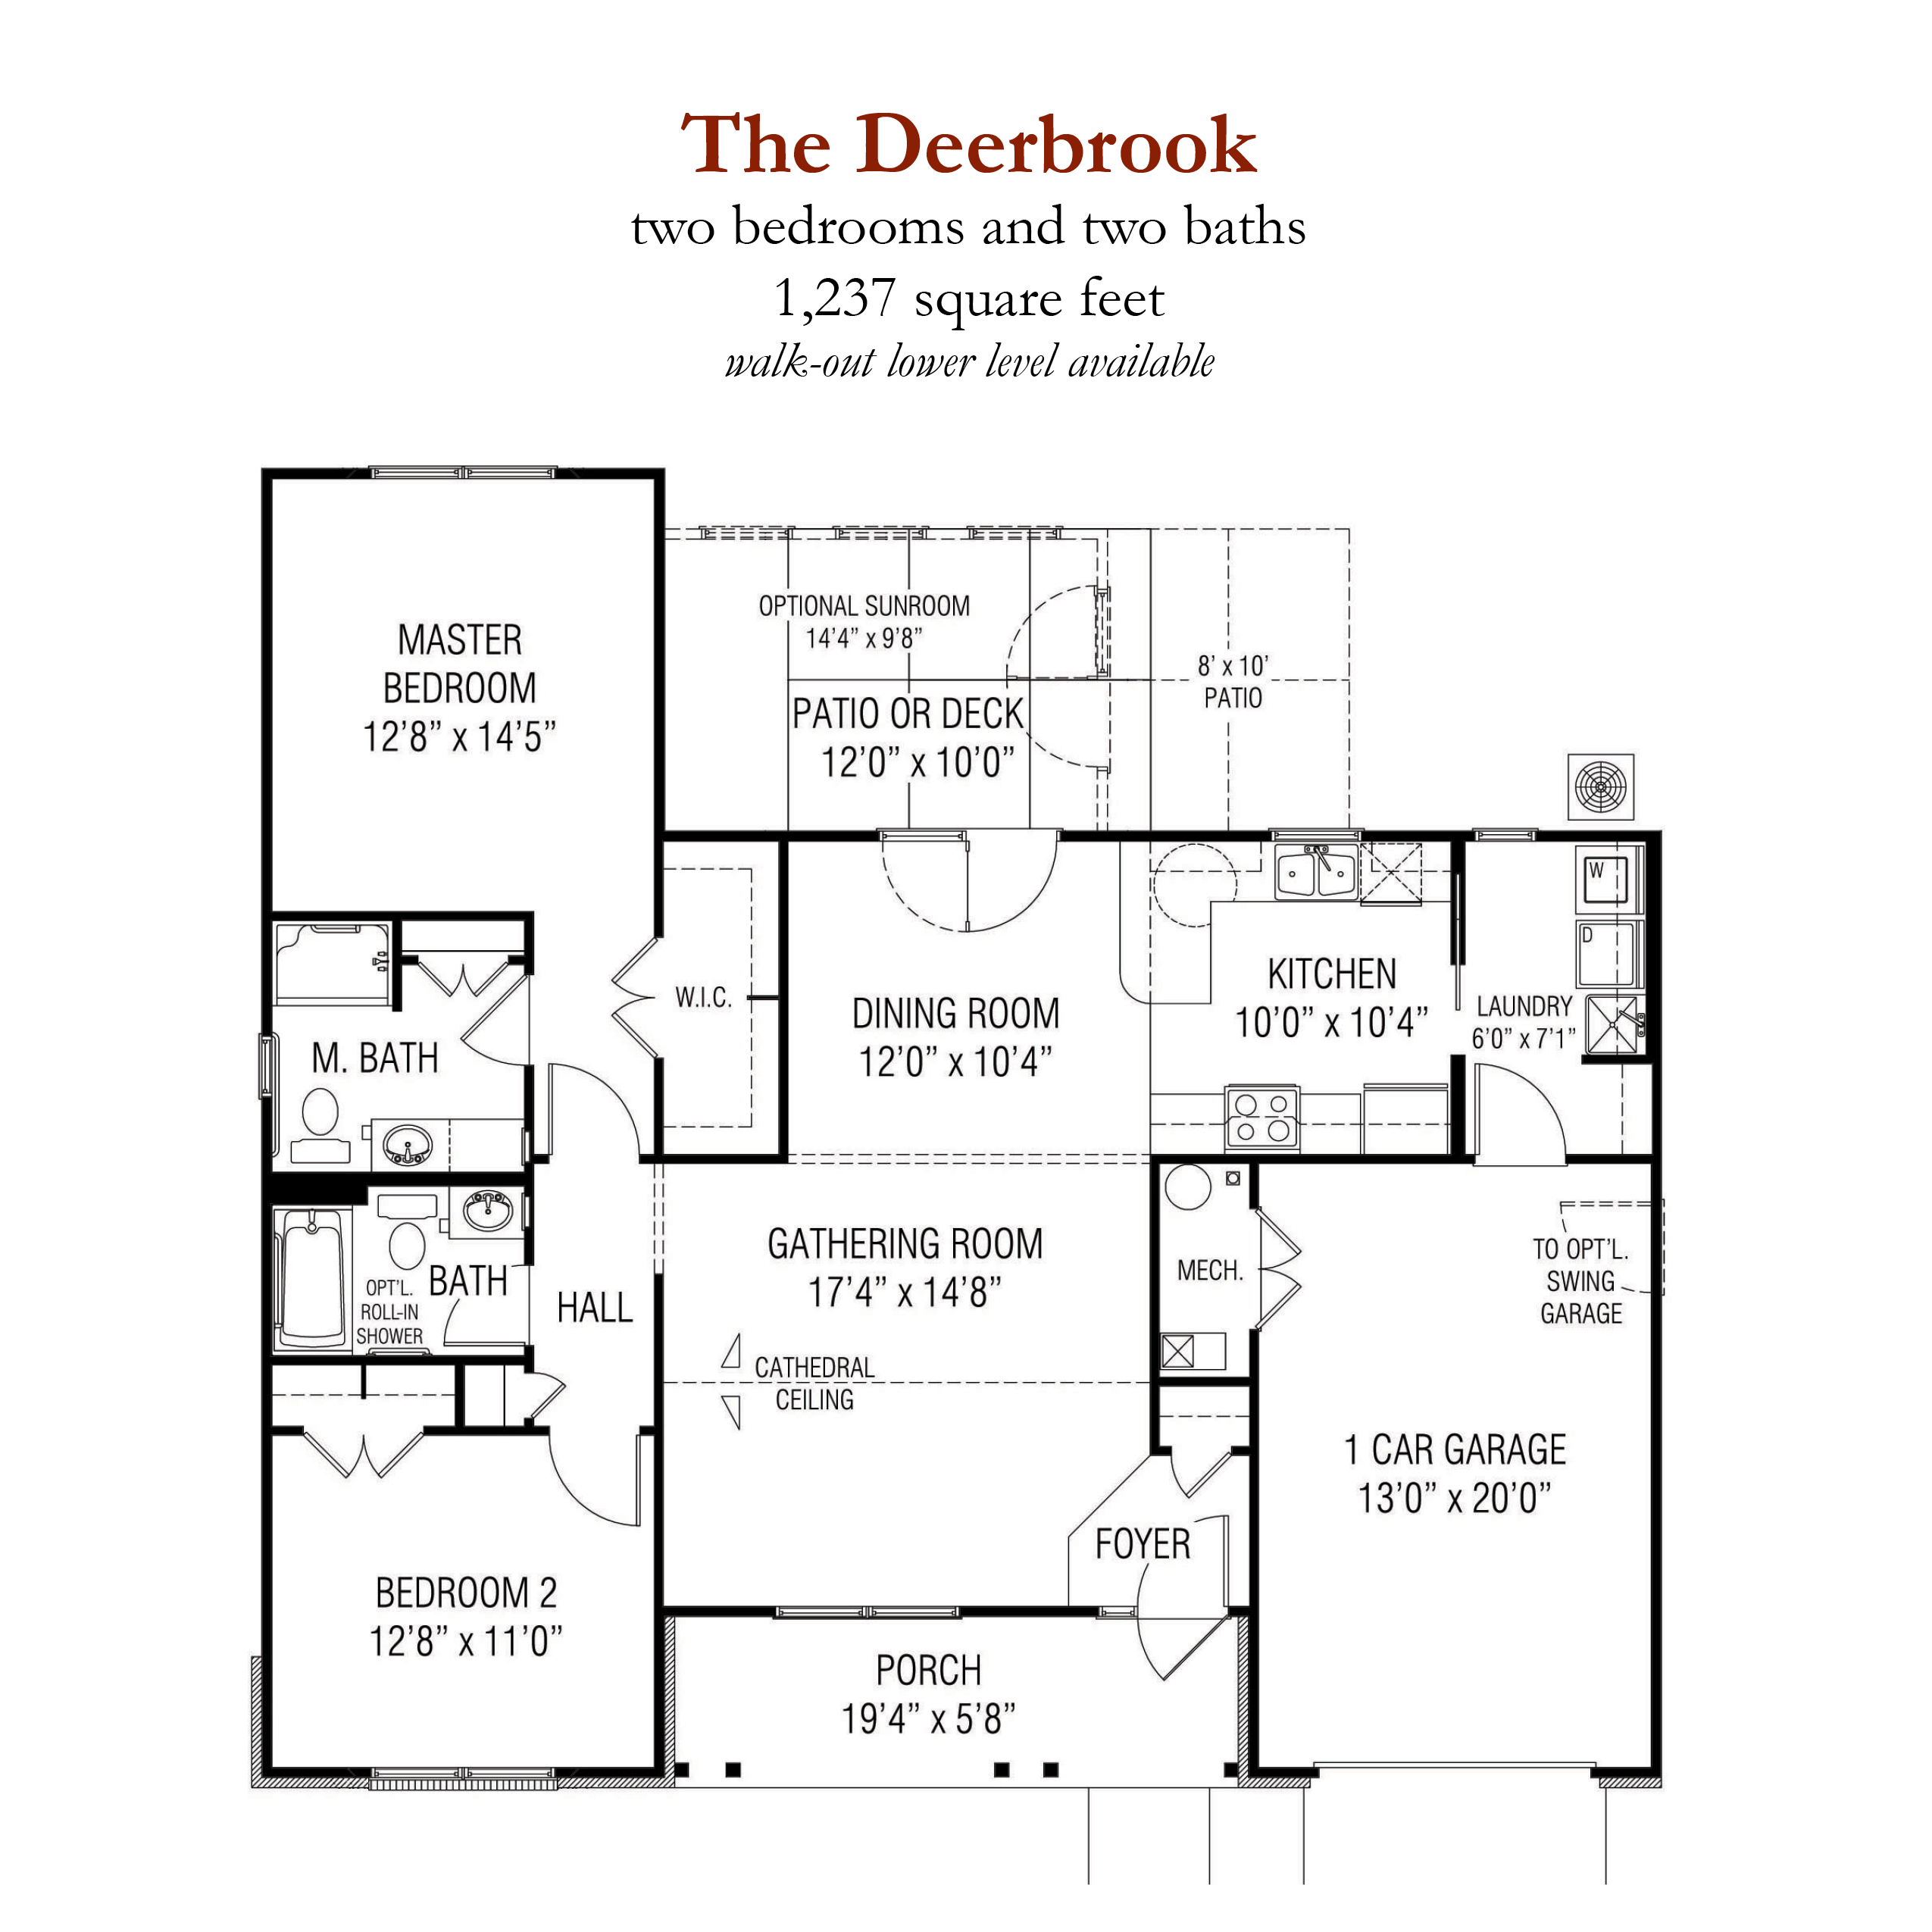 The Deerbrook senior living - 2 bedrooms and 2 bathrooms floor plan